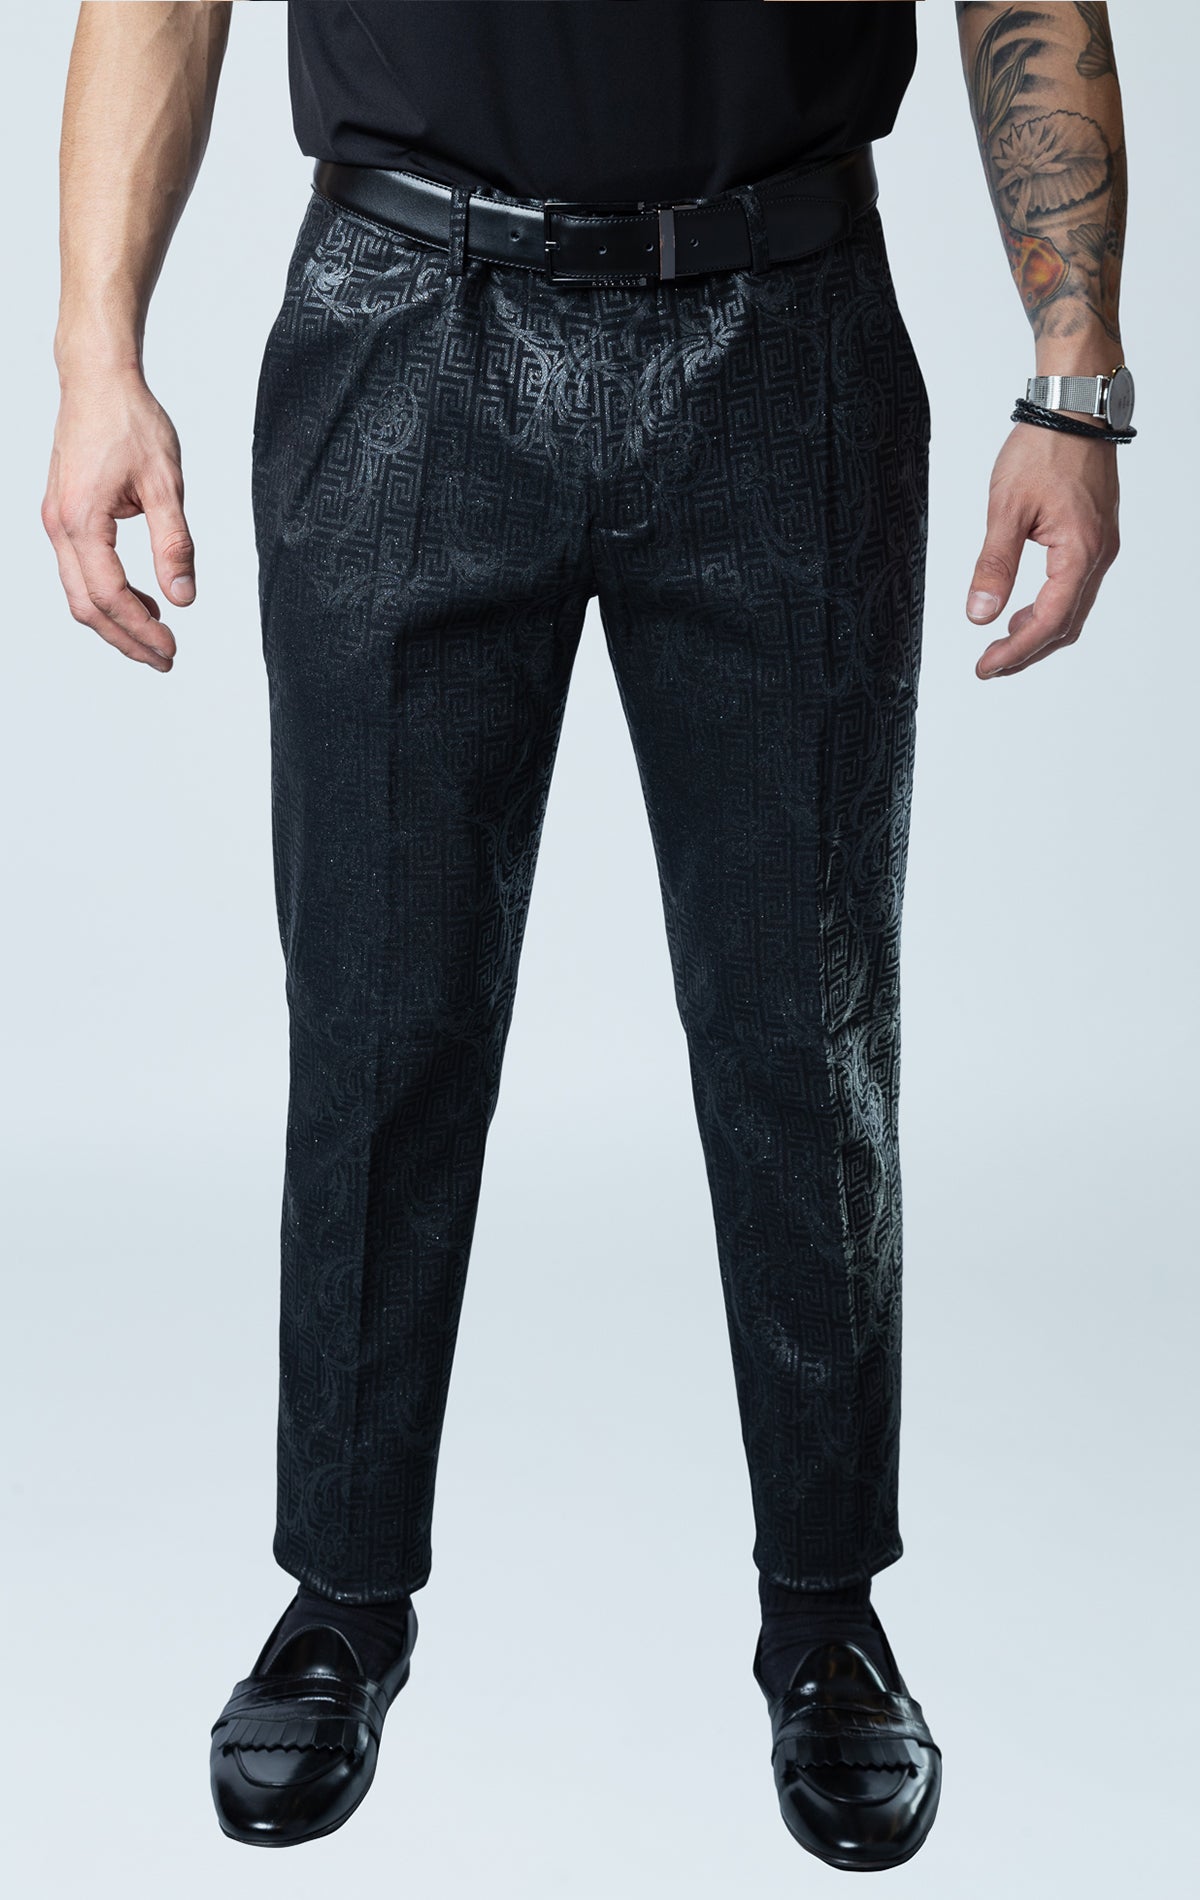 Black greek key pattern designer pants